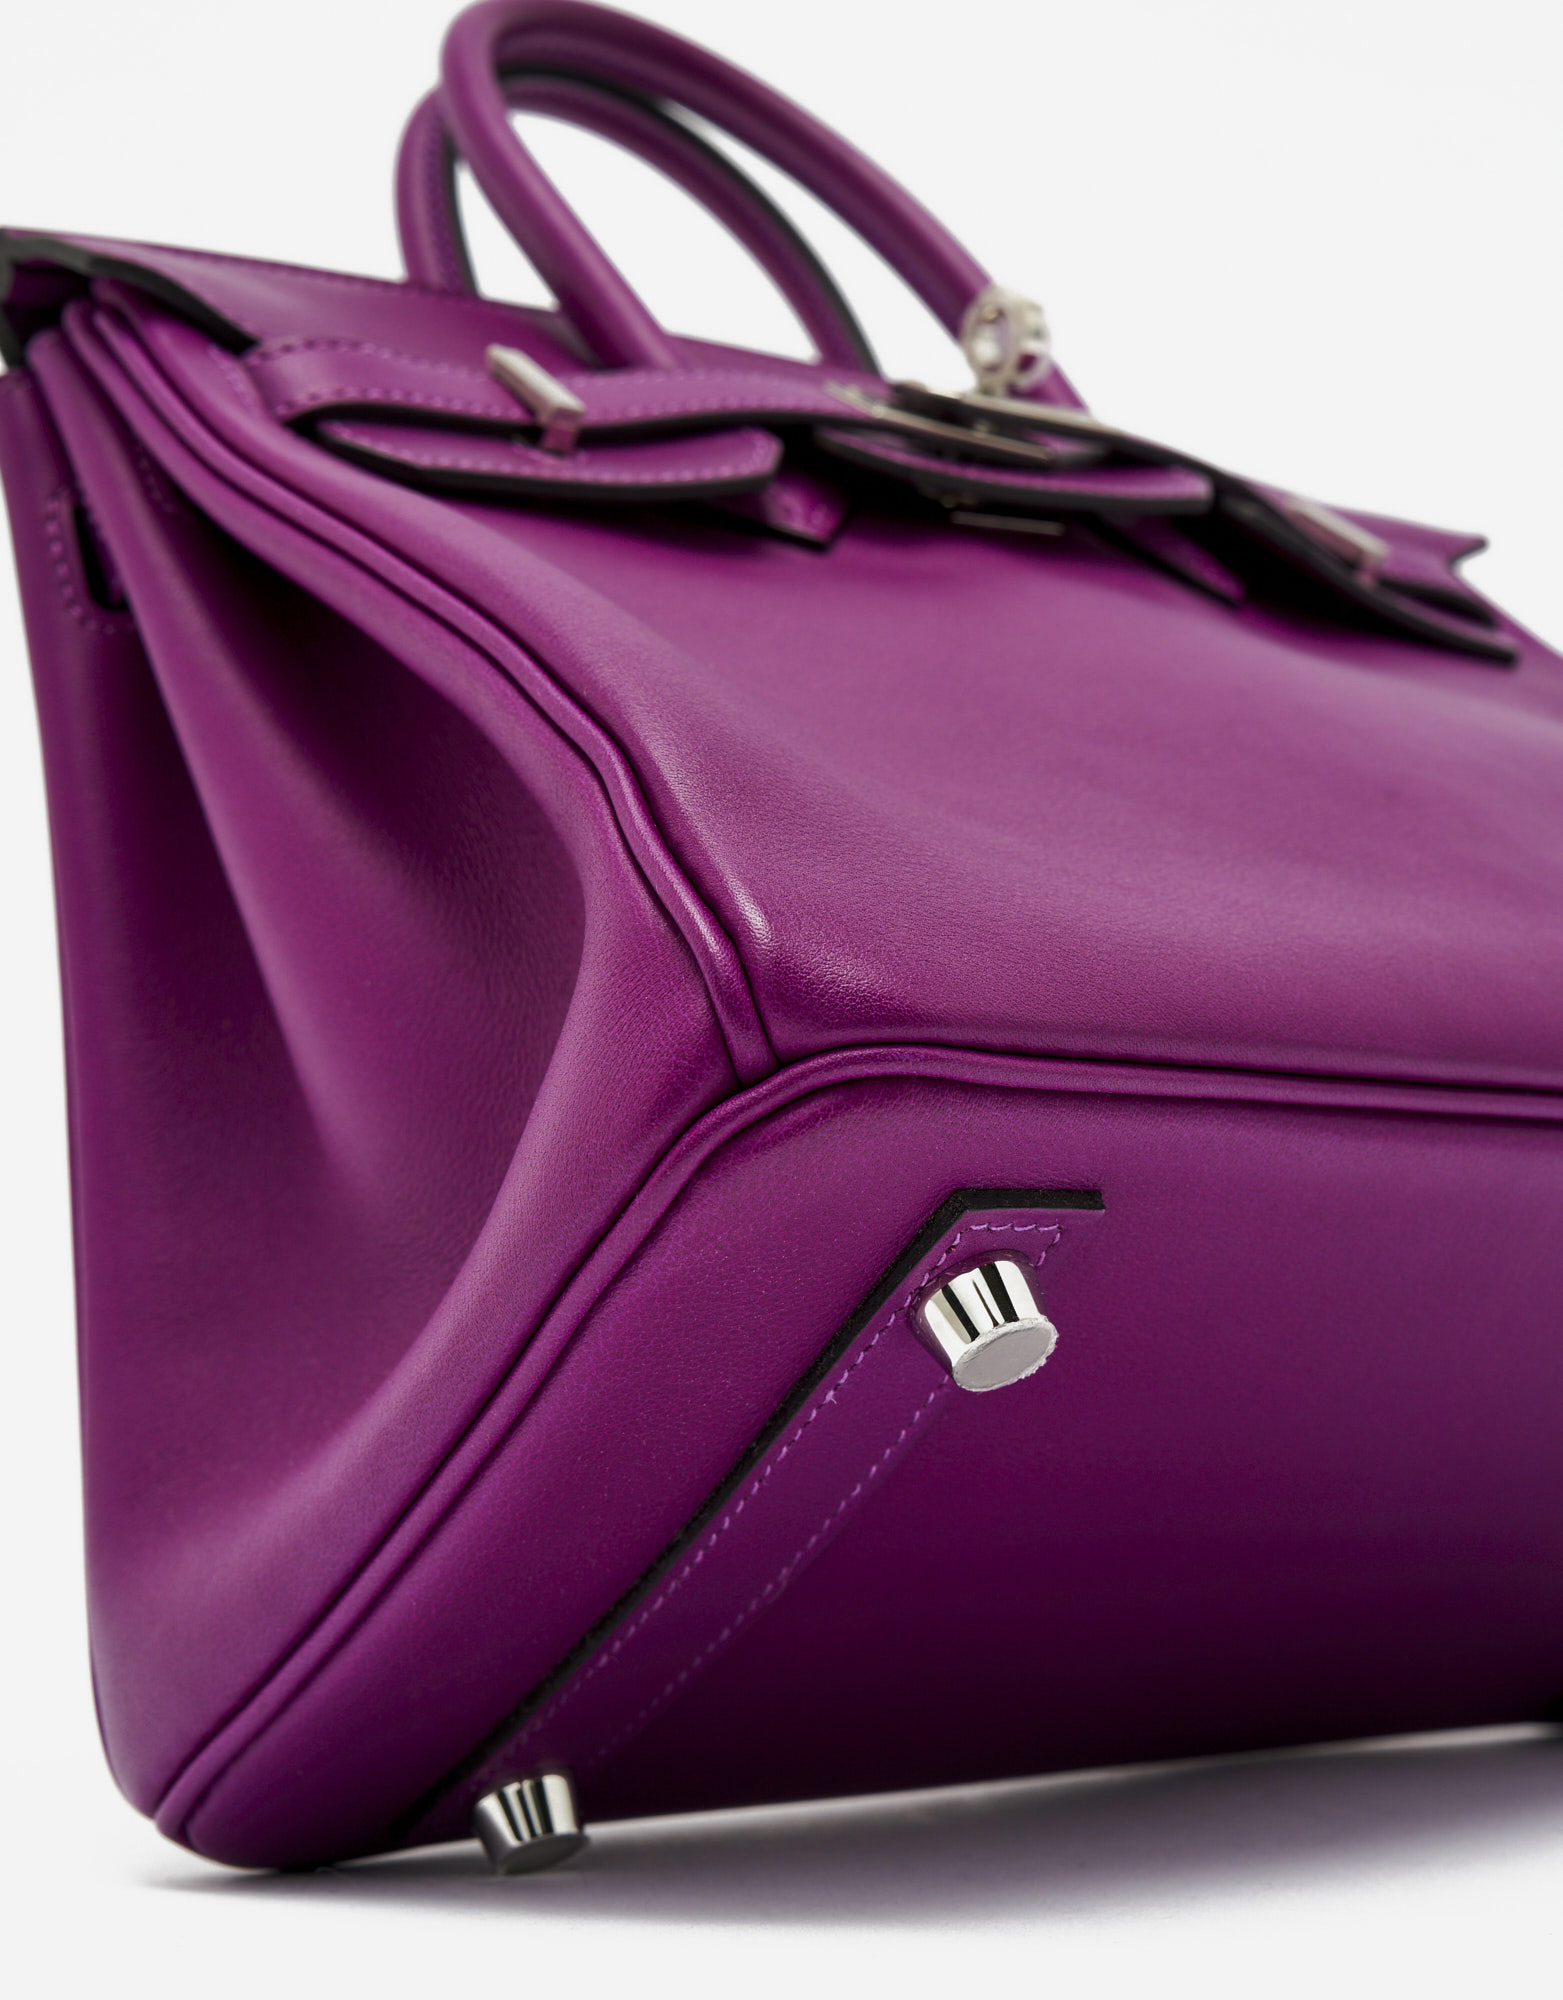 Hermès Swift Birkin 25 - Brown Handle Bags, Handbags - HER545680